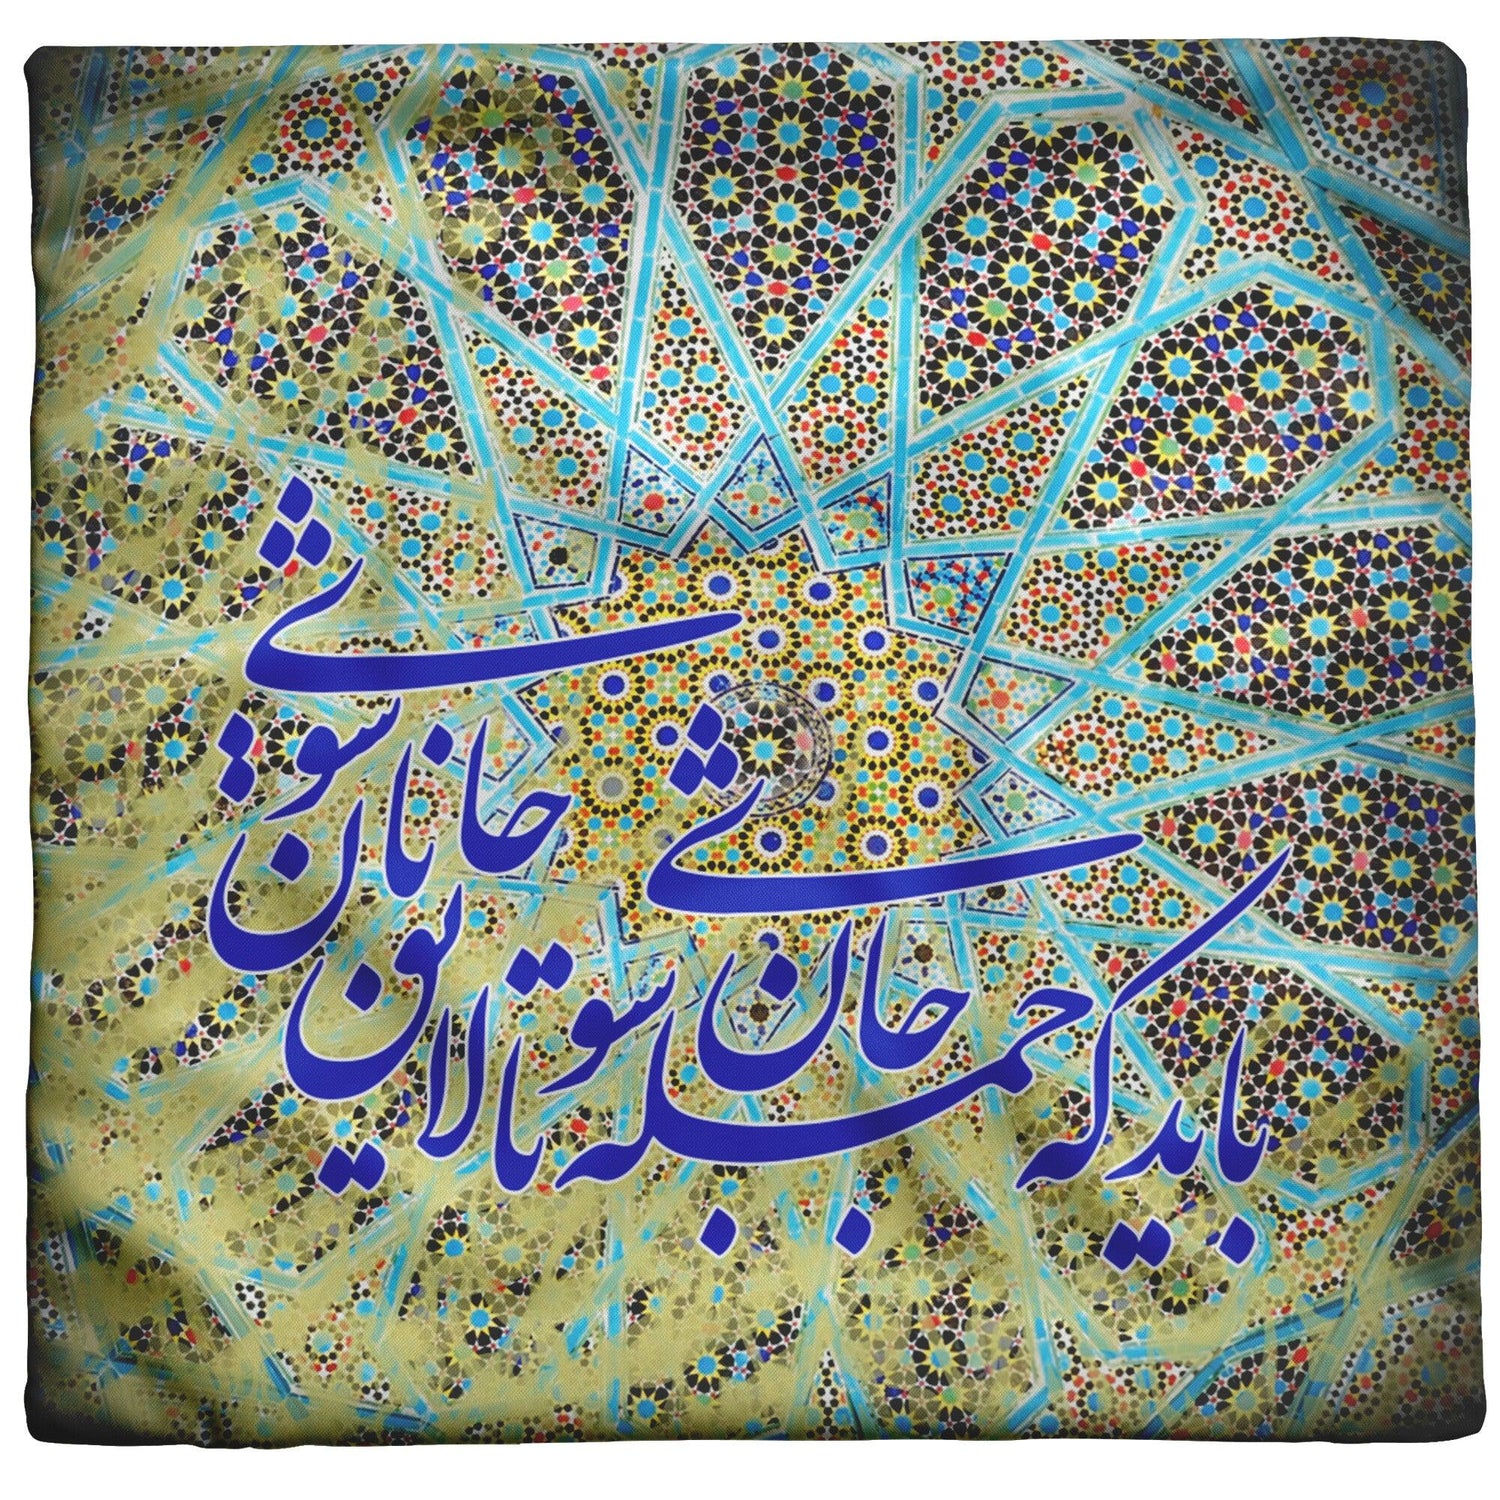 Bayad ke jomleh Jaan shavi -Tile- Persian Pillow - ORIAVI Persian Art, Persian Pillow